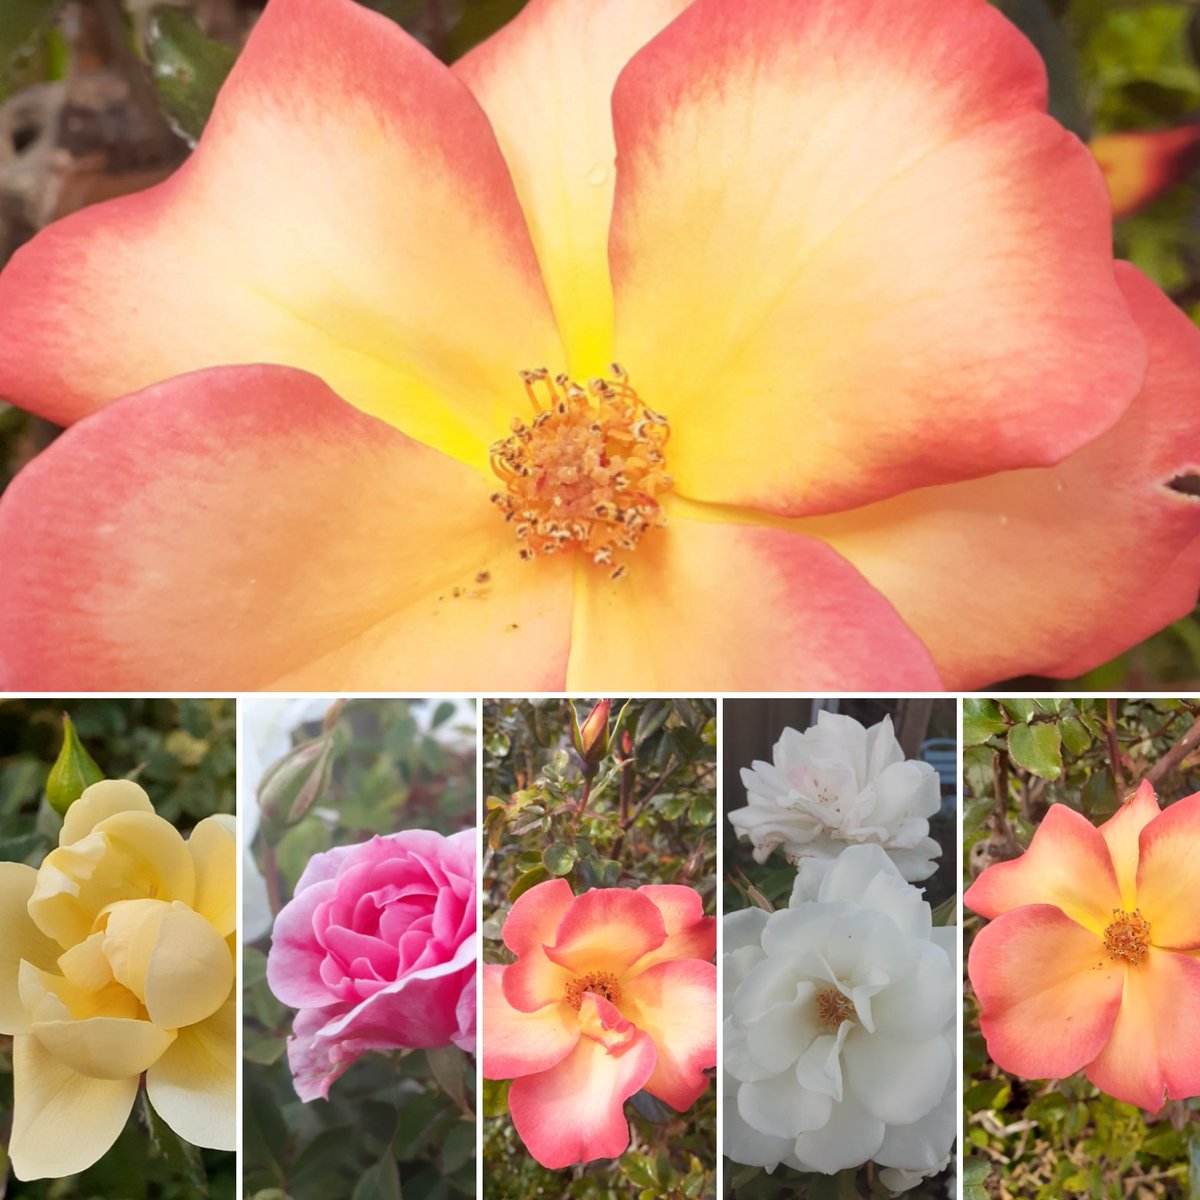 The prolific Playboy rose, Heidesommer, Iceberg and Bonica this week. 🌸💞⚘ #RosrWednesday #GardeningX #Flowers #FlowersOfTwitter #flowersmakeeverythingbetter #writerslife #aroseaday